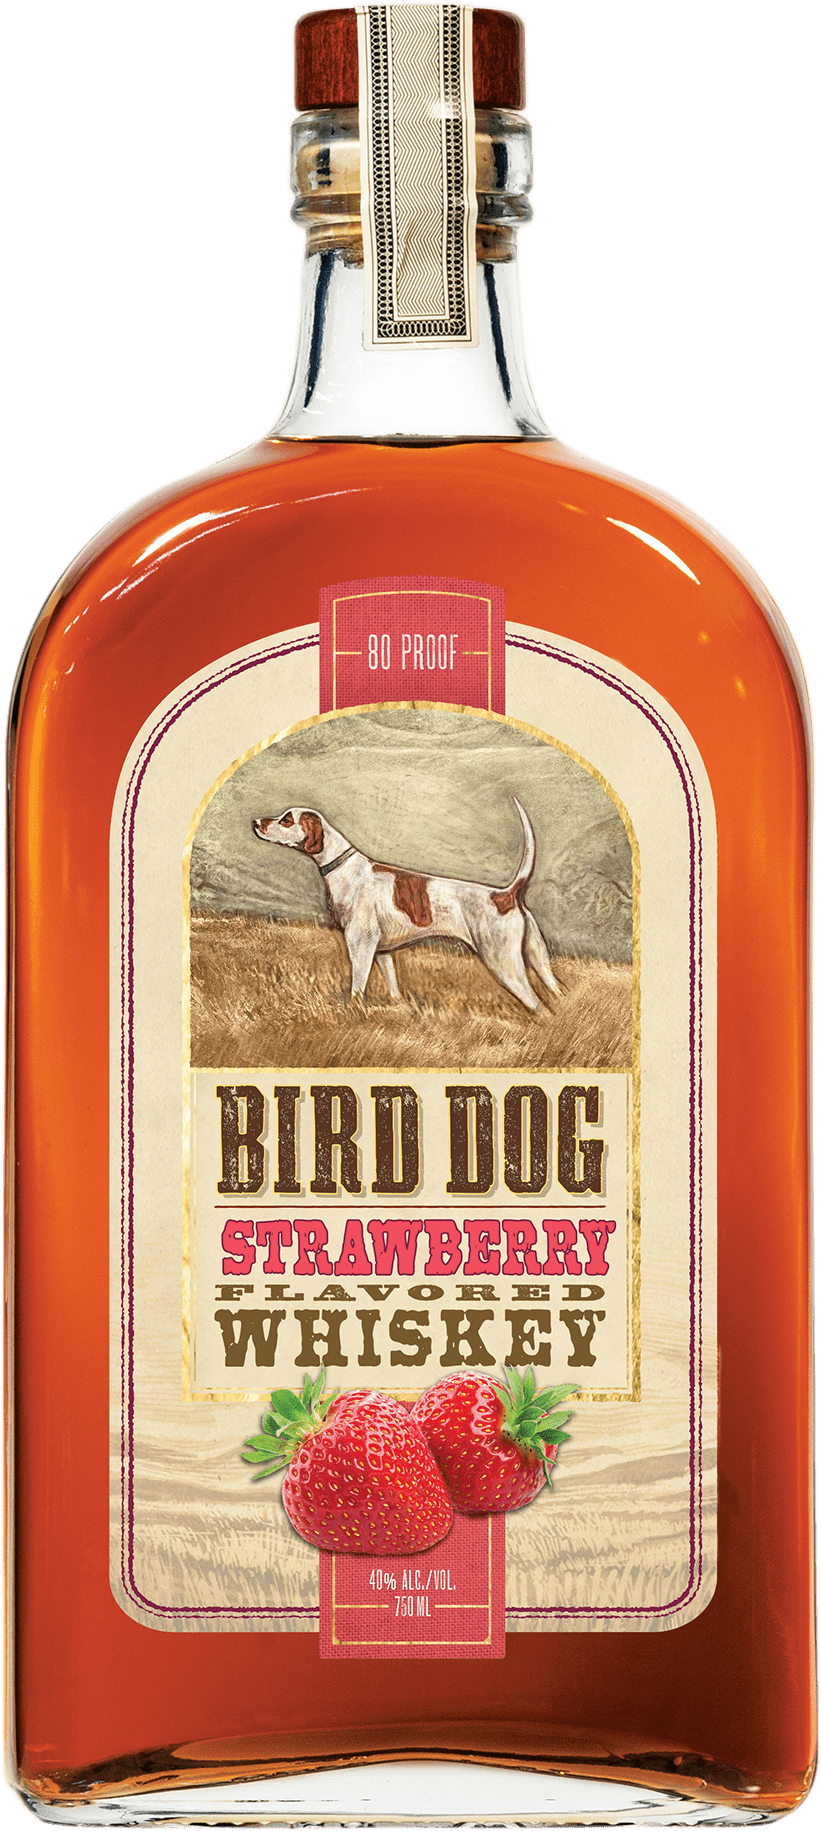 Bottle of Bird Dog Whiskey